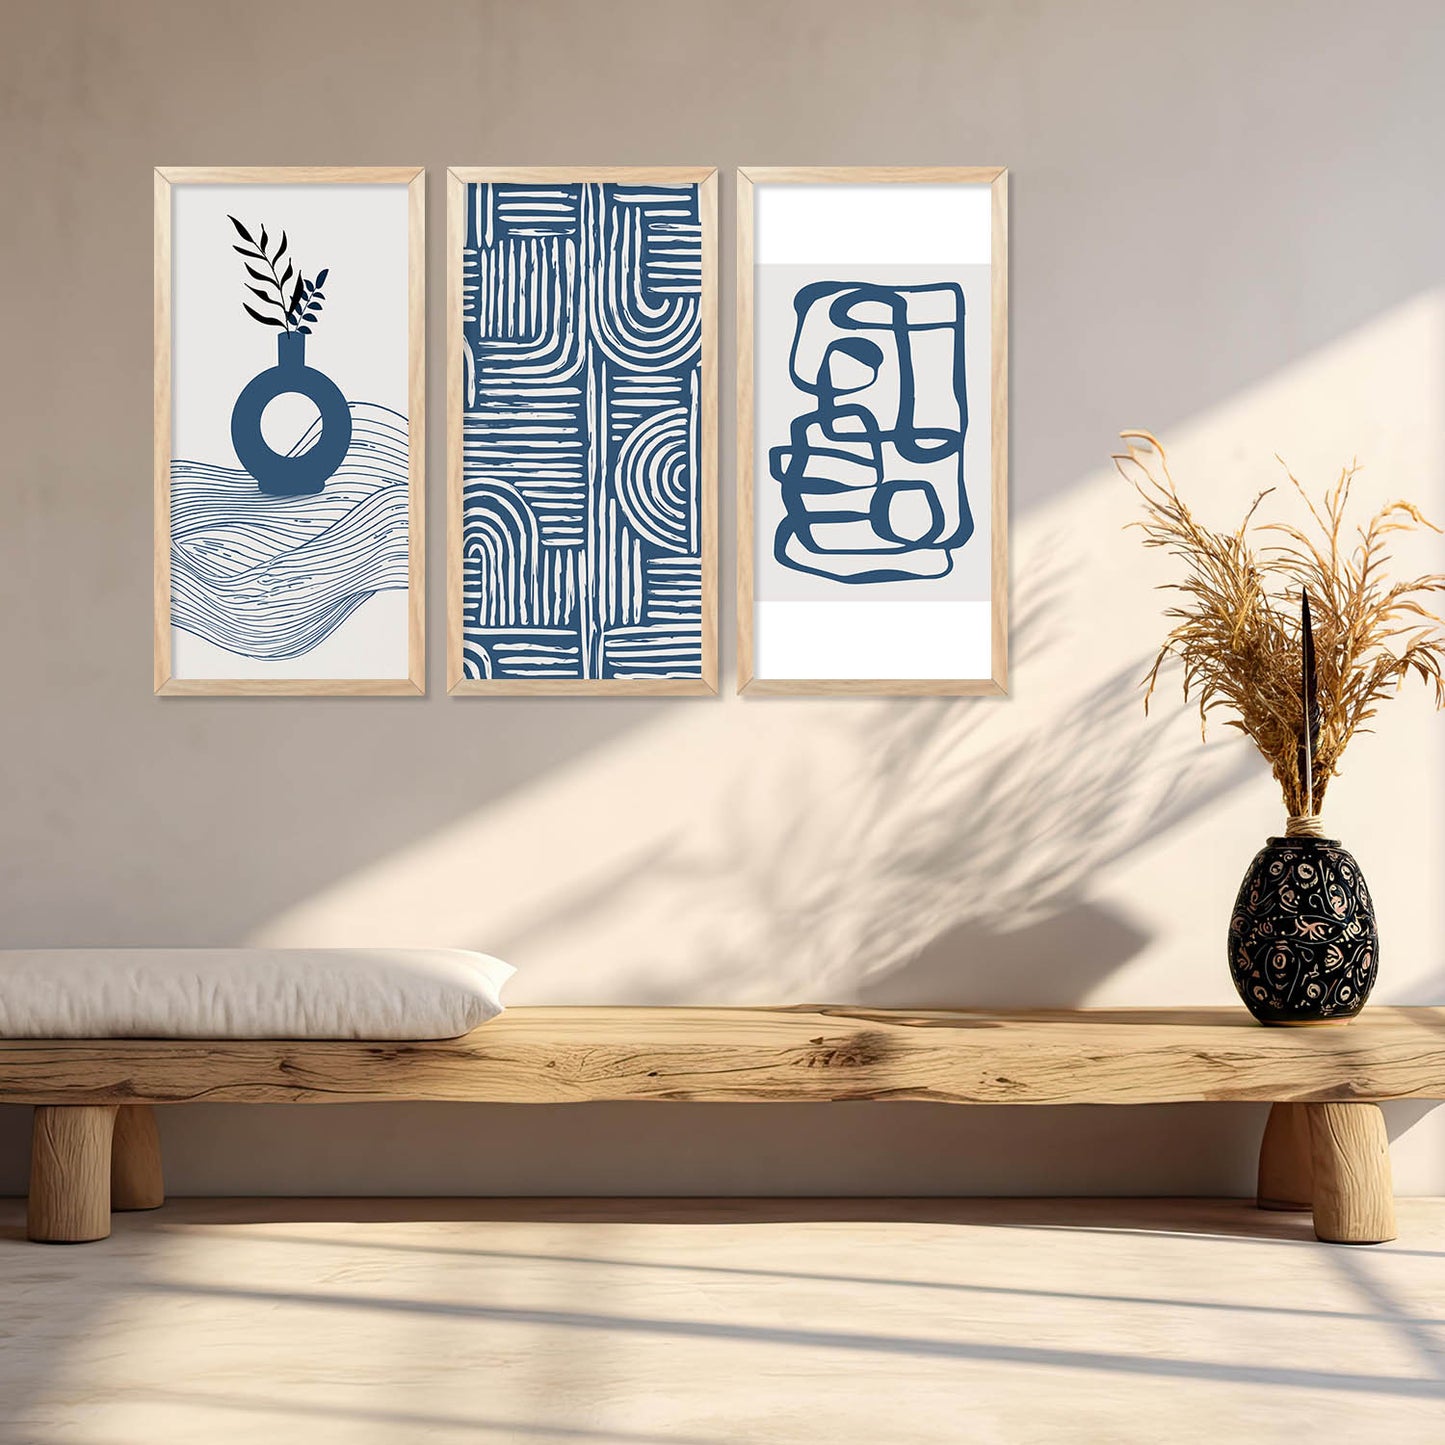 Boho Wall Art Home Décor Living Room , Decorative Wall Prints